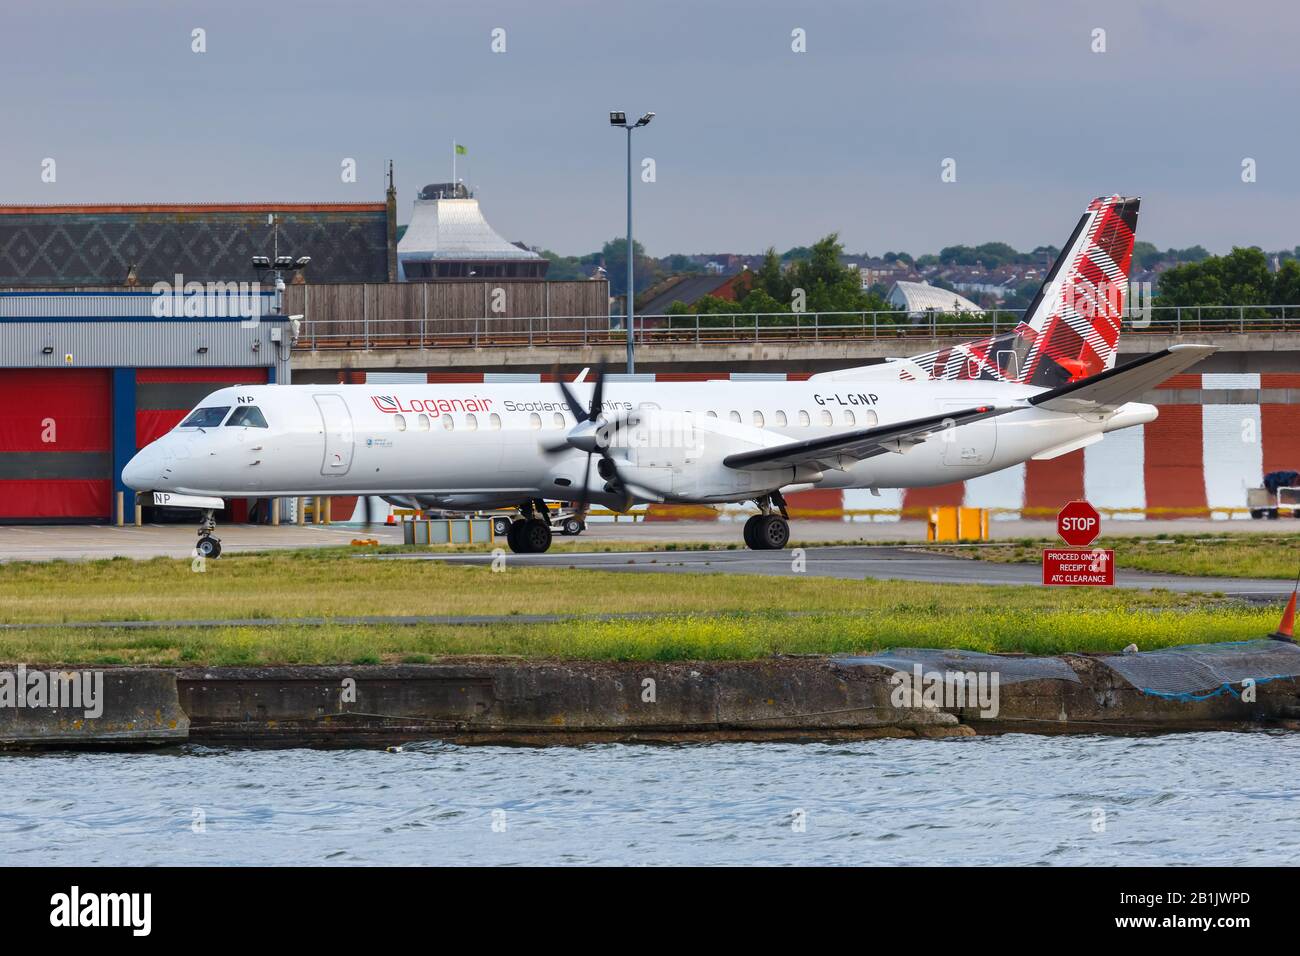 London, United Kingdom – July 7, 2019: Loganair Saab 2000 airplane at London City airport (LCY) in the United Kingdom. Stock Photo